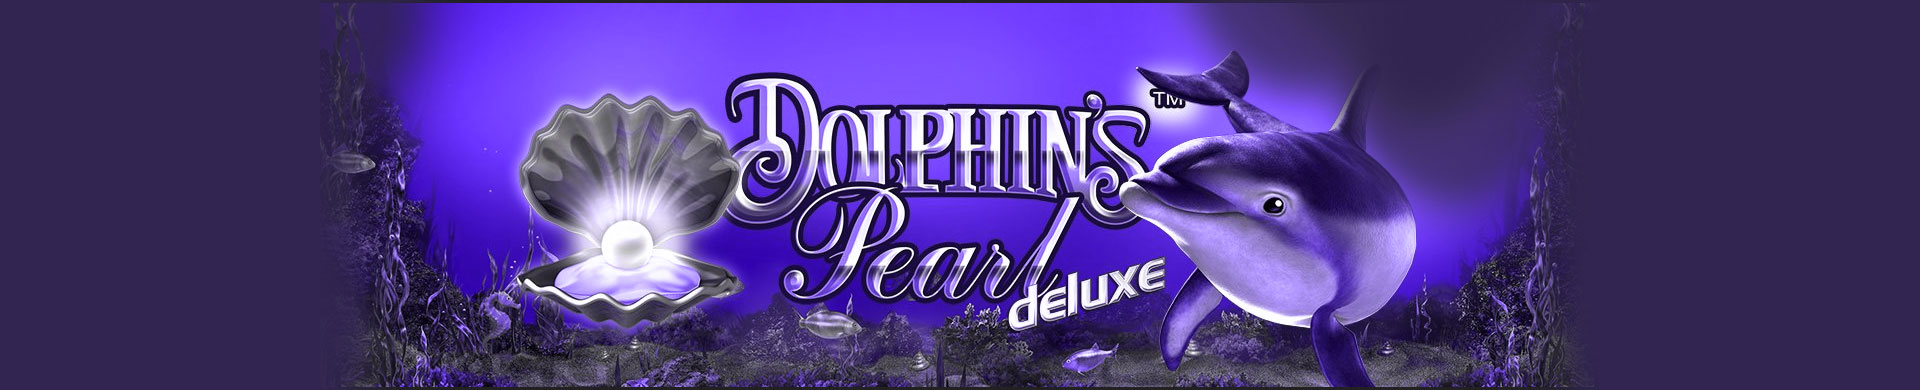 Dolphin’s Pearl slot machine.